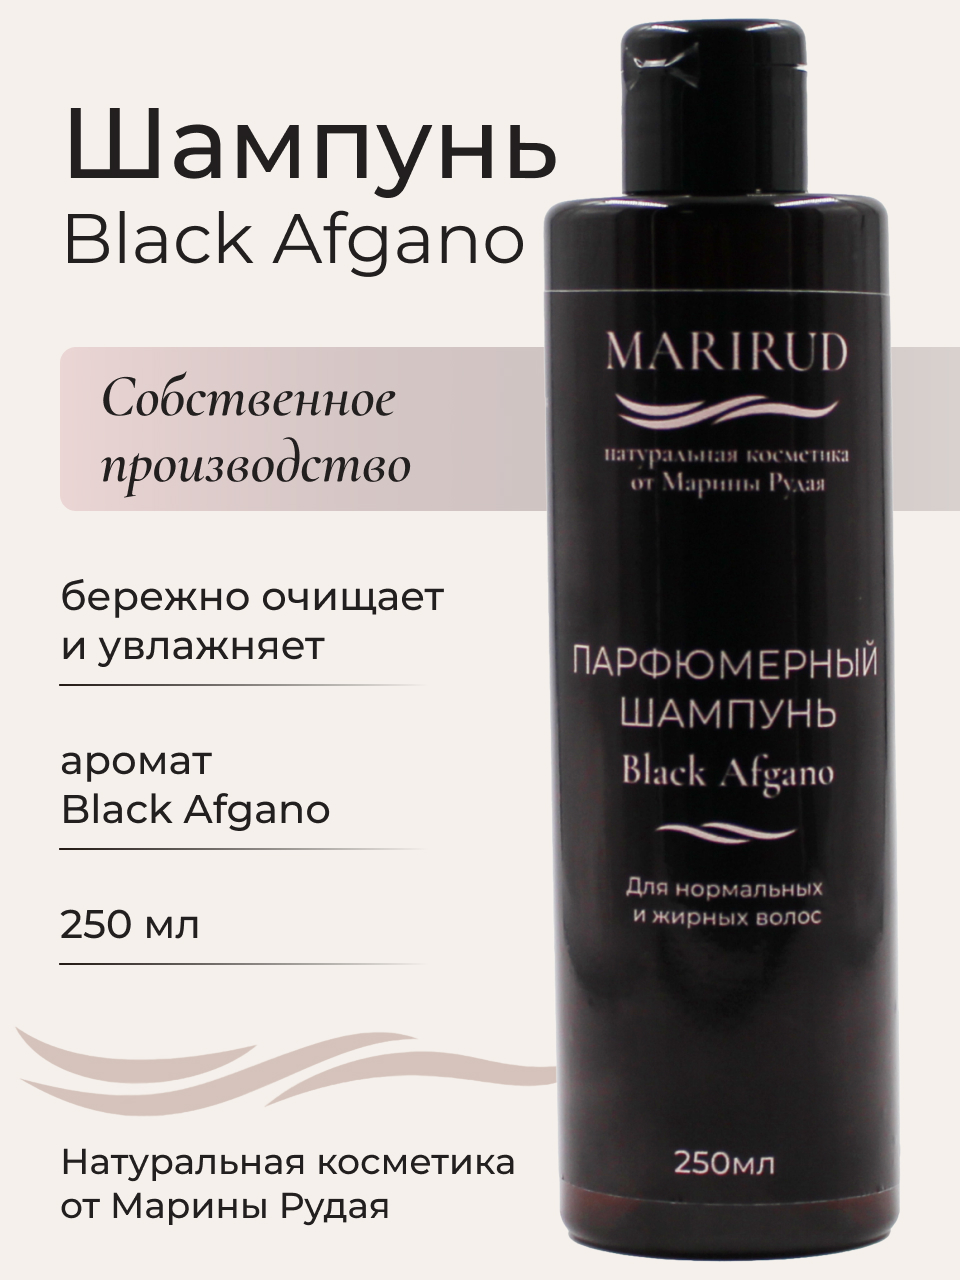 Набор парфюмерный- Шампуни Black Afgano и Tobacco Vanille afgano